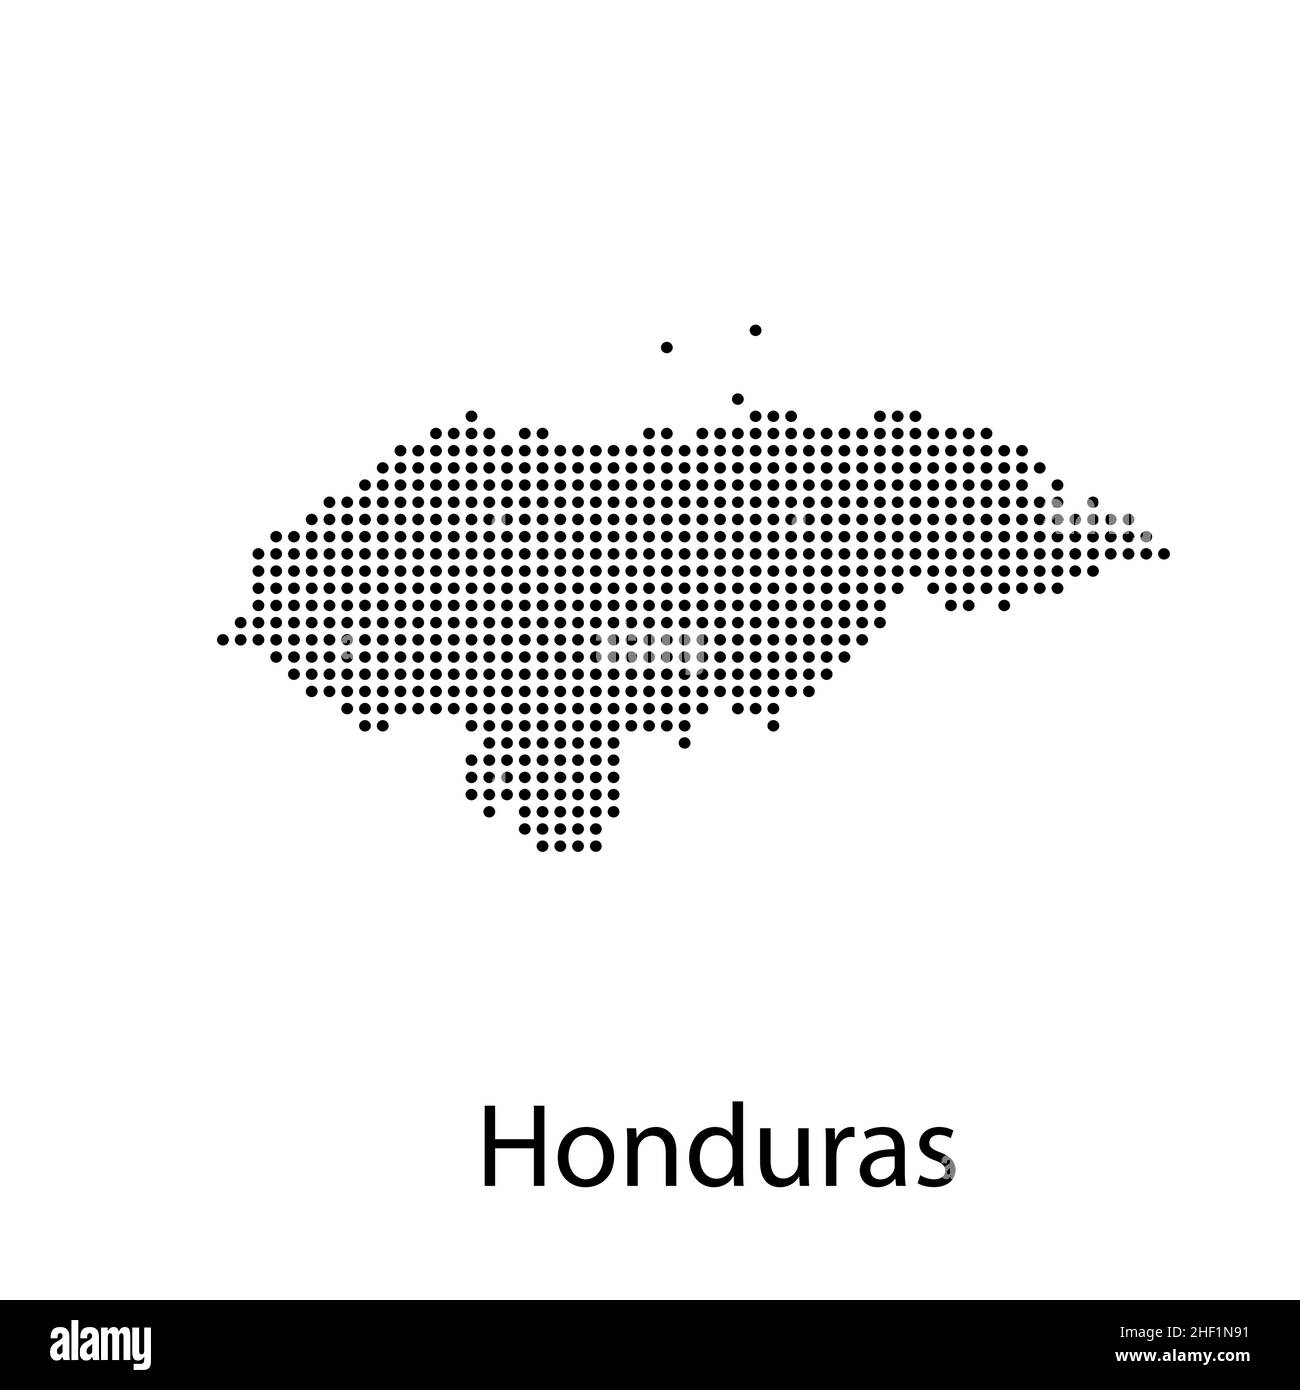 Black Honduras map with department borders vector illustration Stock Vector